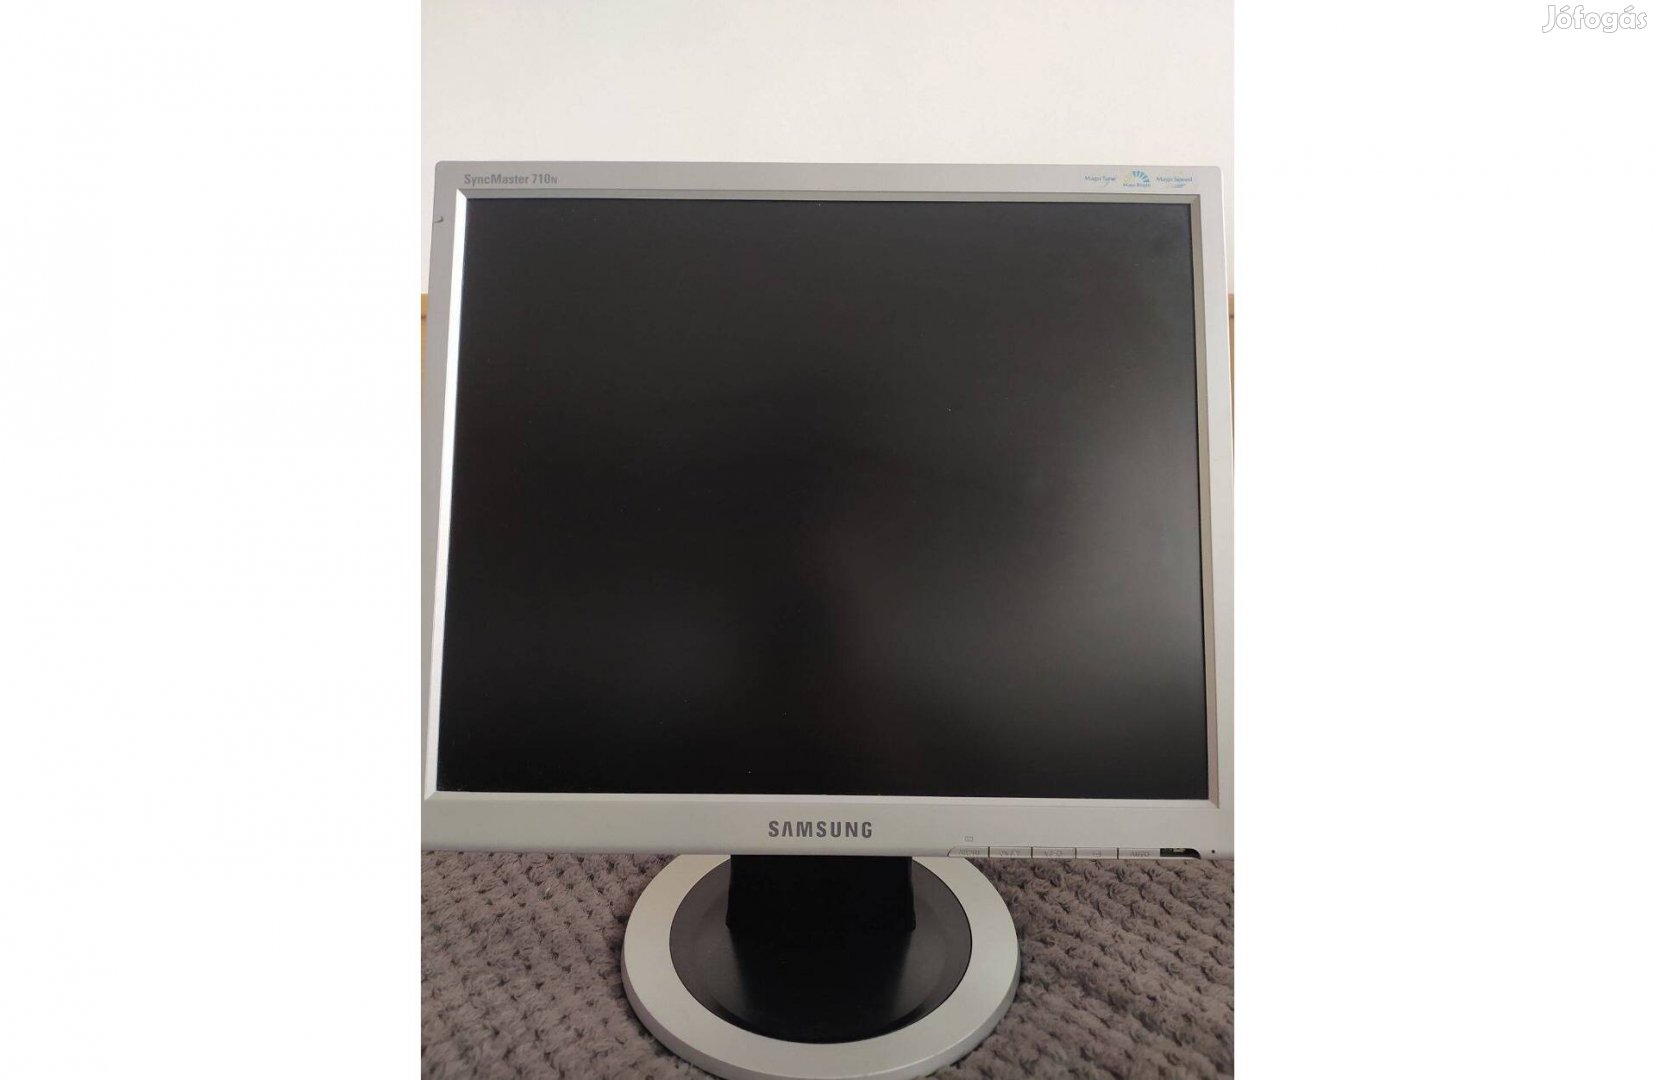 Samsung Syncmaster 710N monitor